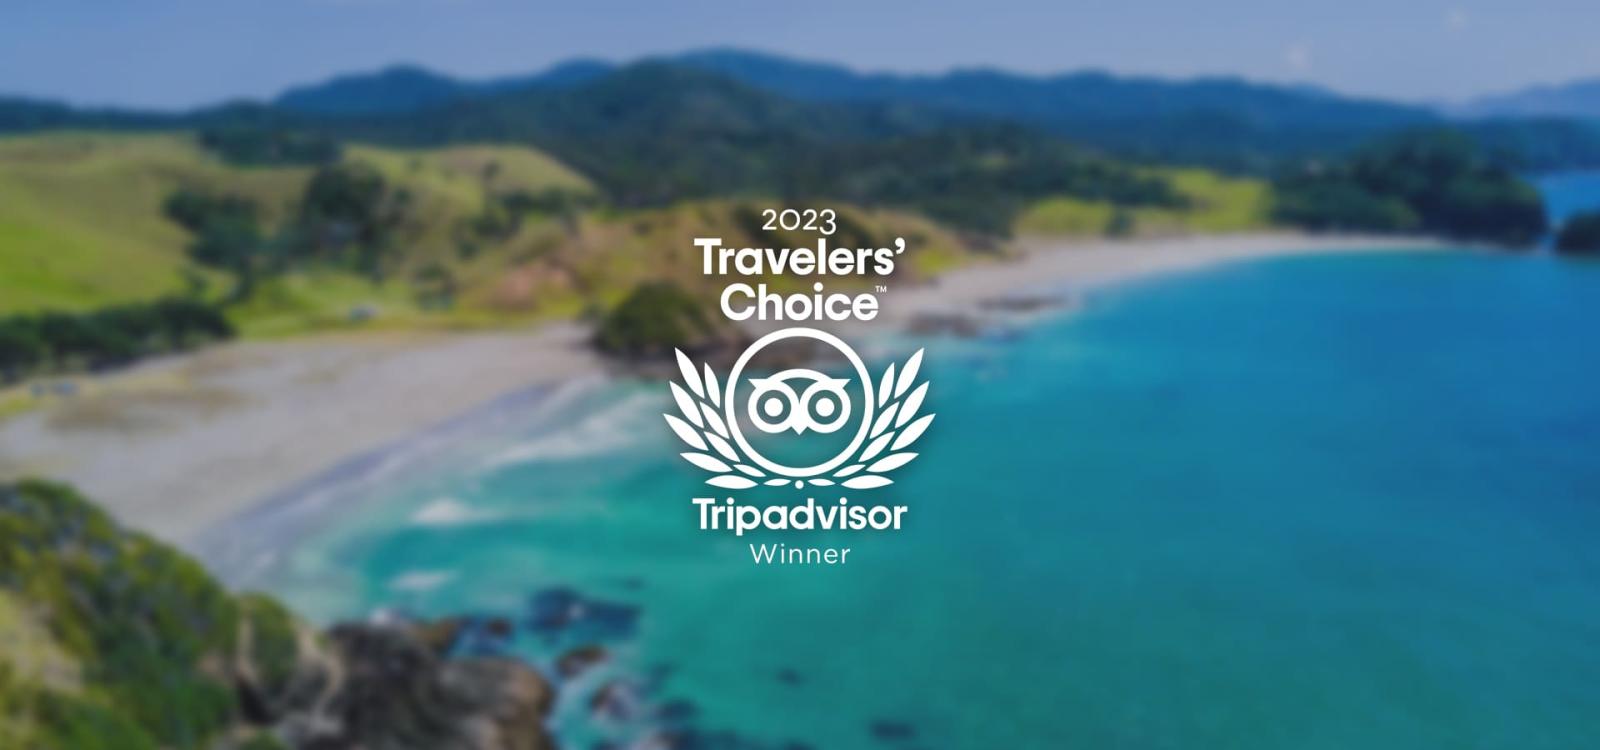 First Light Travel wins 2023 Tripadvisor Travelers Choice Award